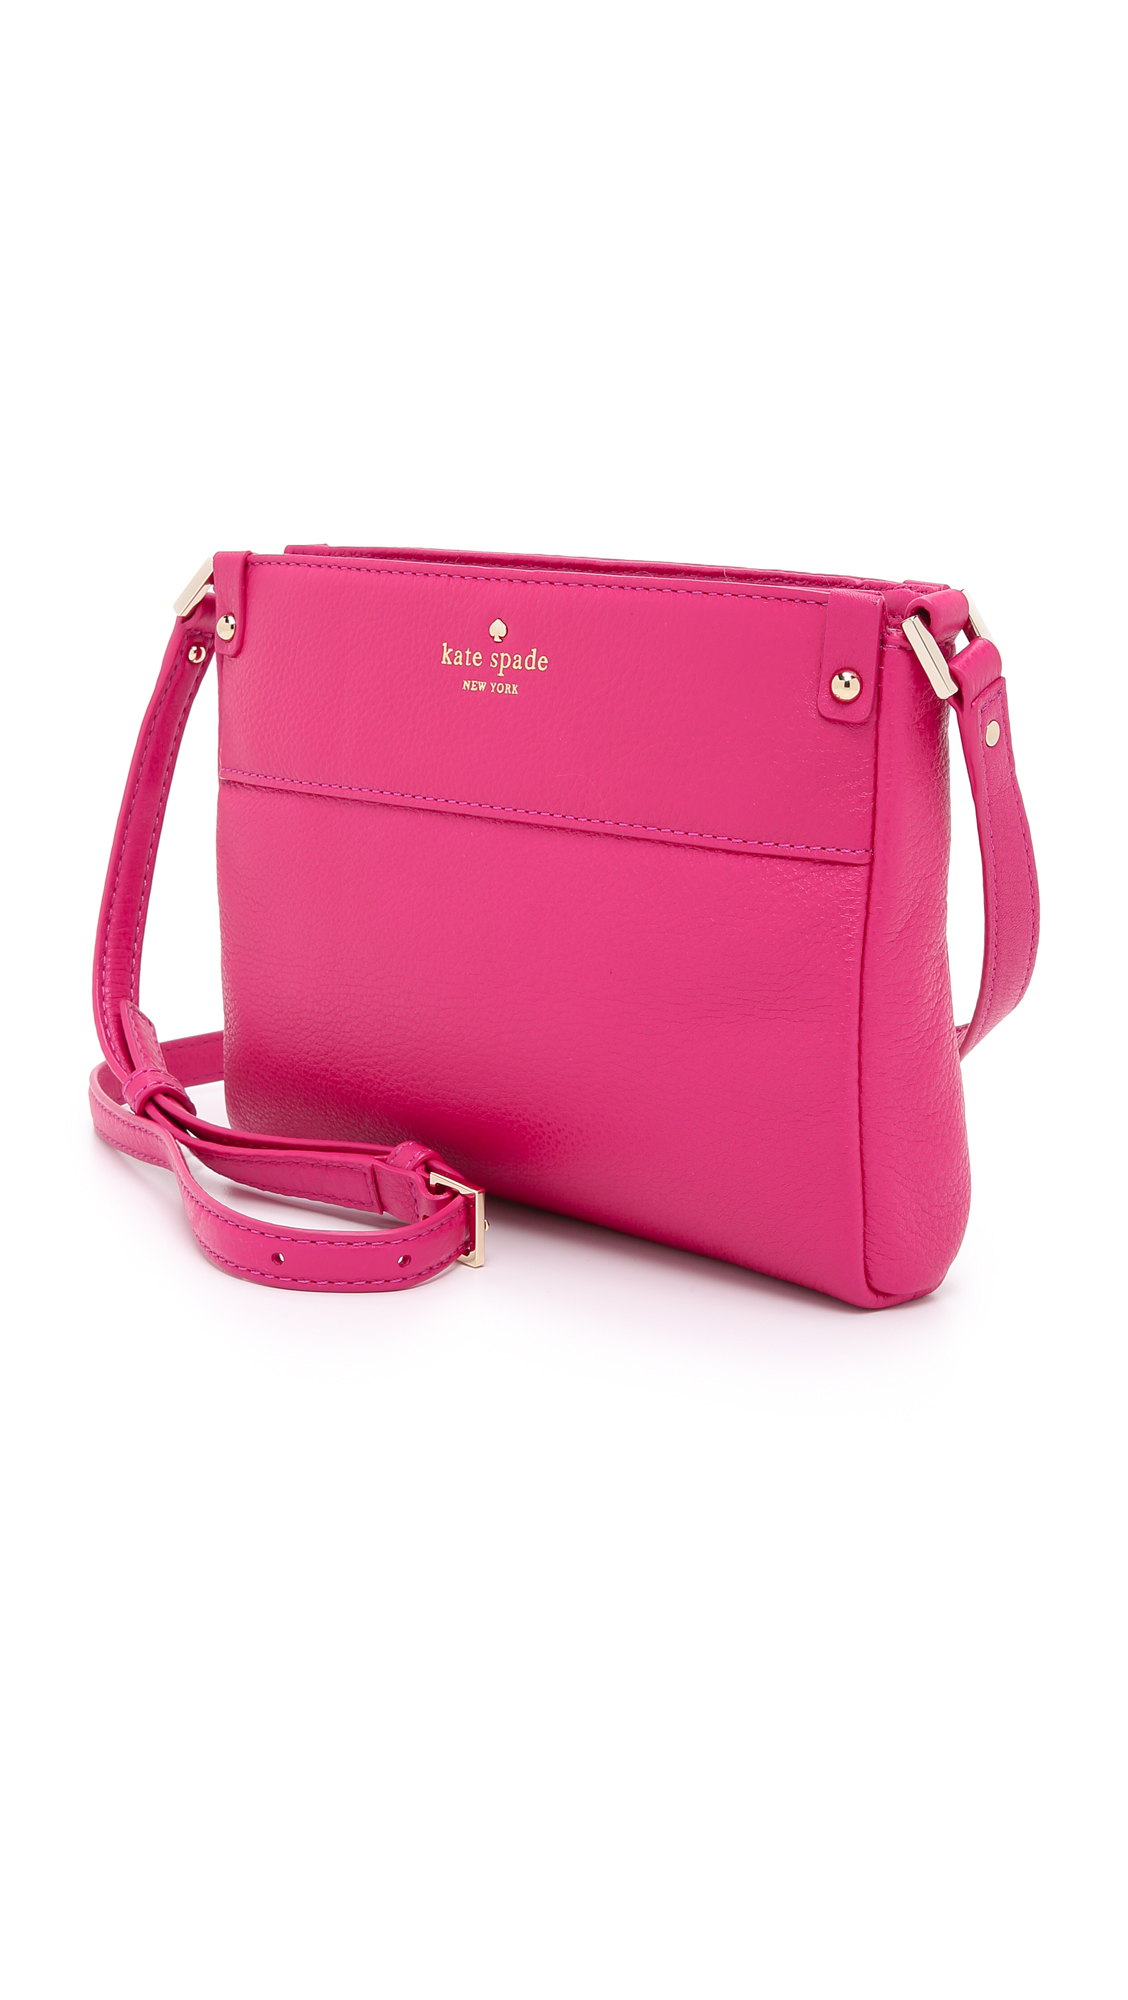 Kate spade Cooper Cross Body Bag - Raisin in Pink (Sweetheart Pink) | Lyst